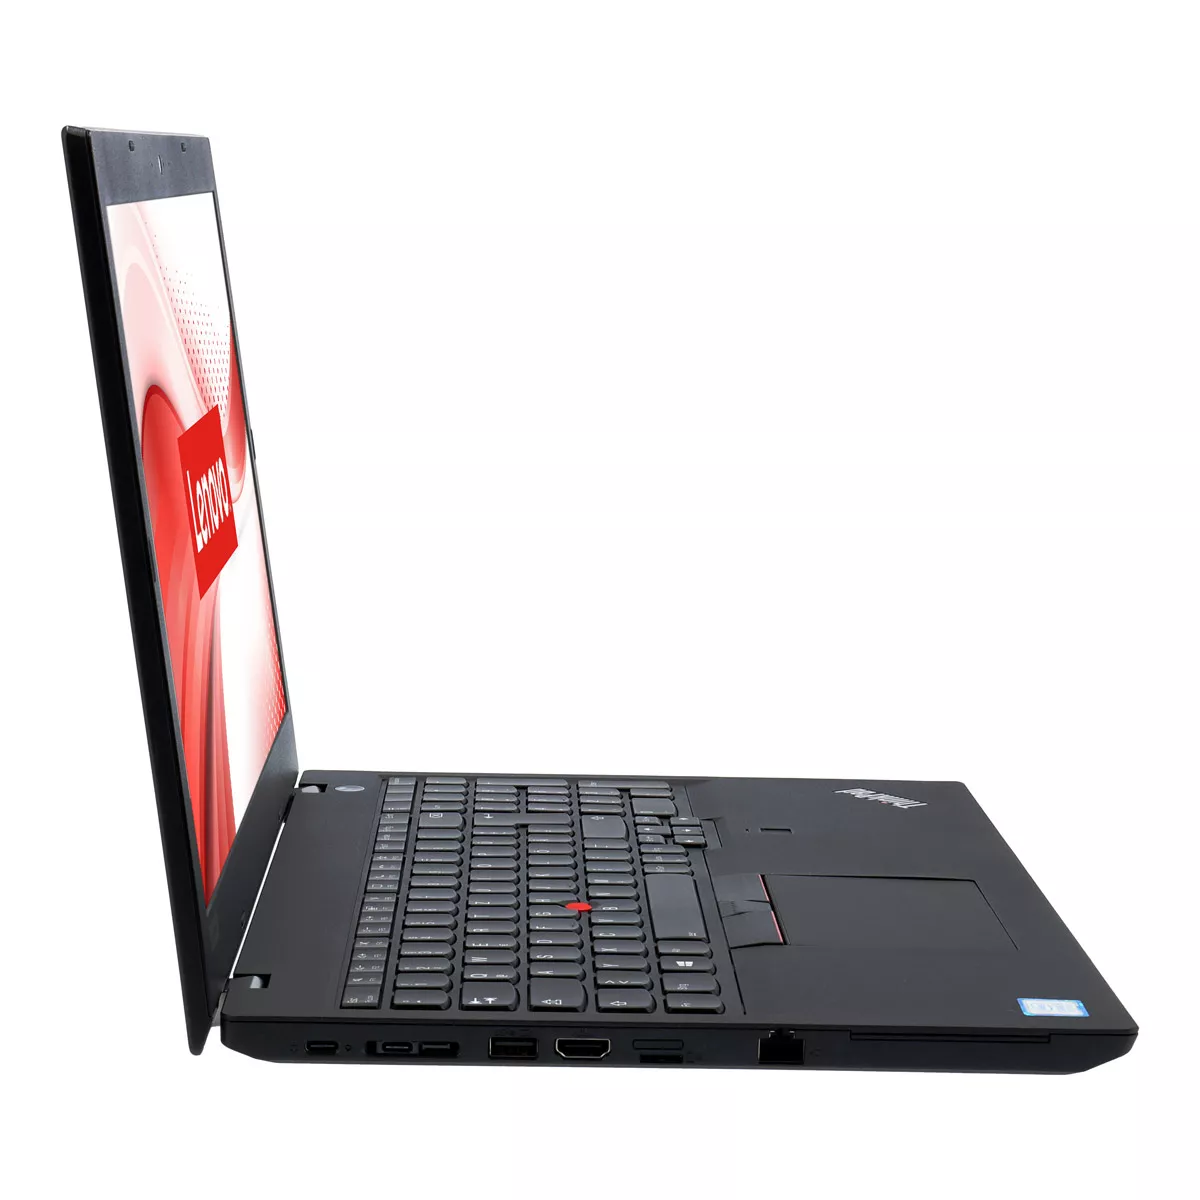 Lenovo ThinkPad L580 Core i3 8130U Full-HD 4 GB 120 GB SSD Webcam A